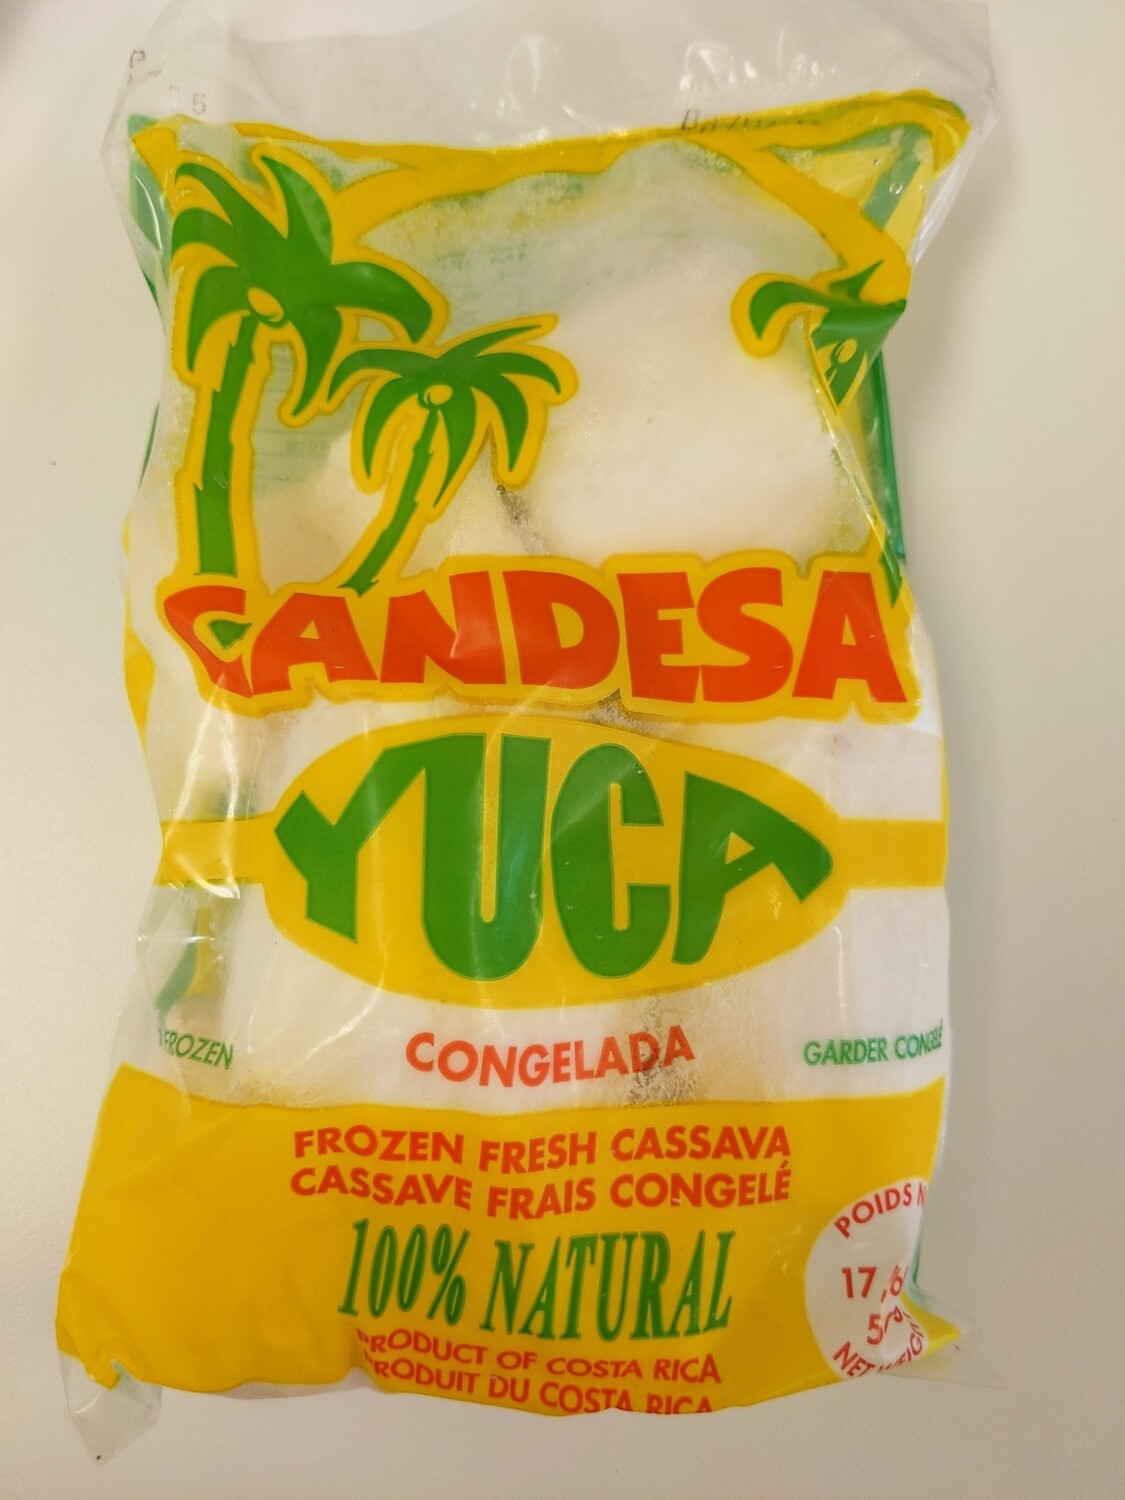 Candesa yuca cassava frozen 